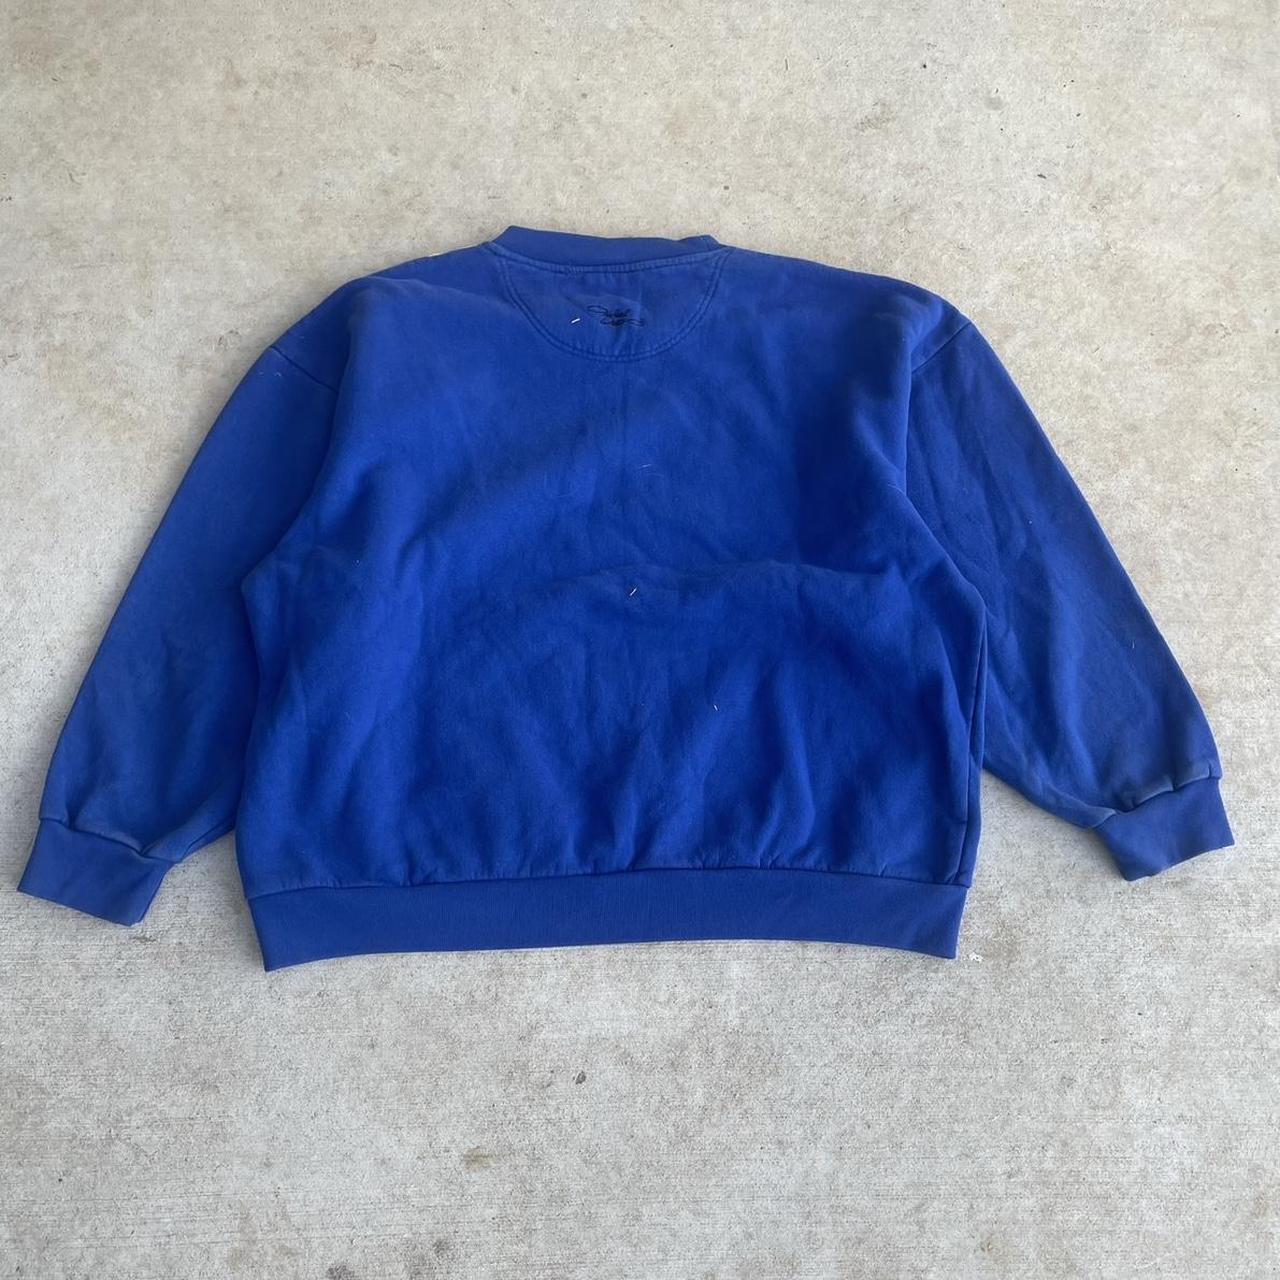 Chase Authentics Men's Blue Sweatshirt (5)